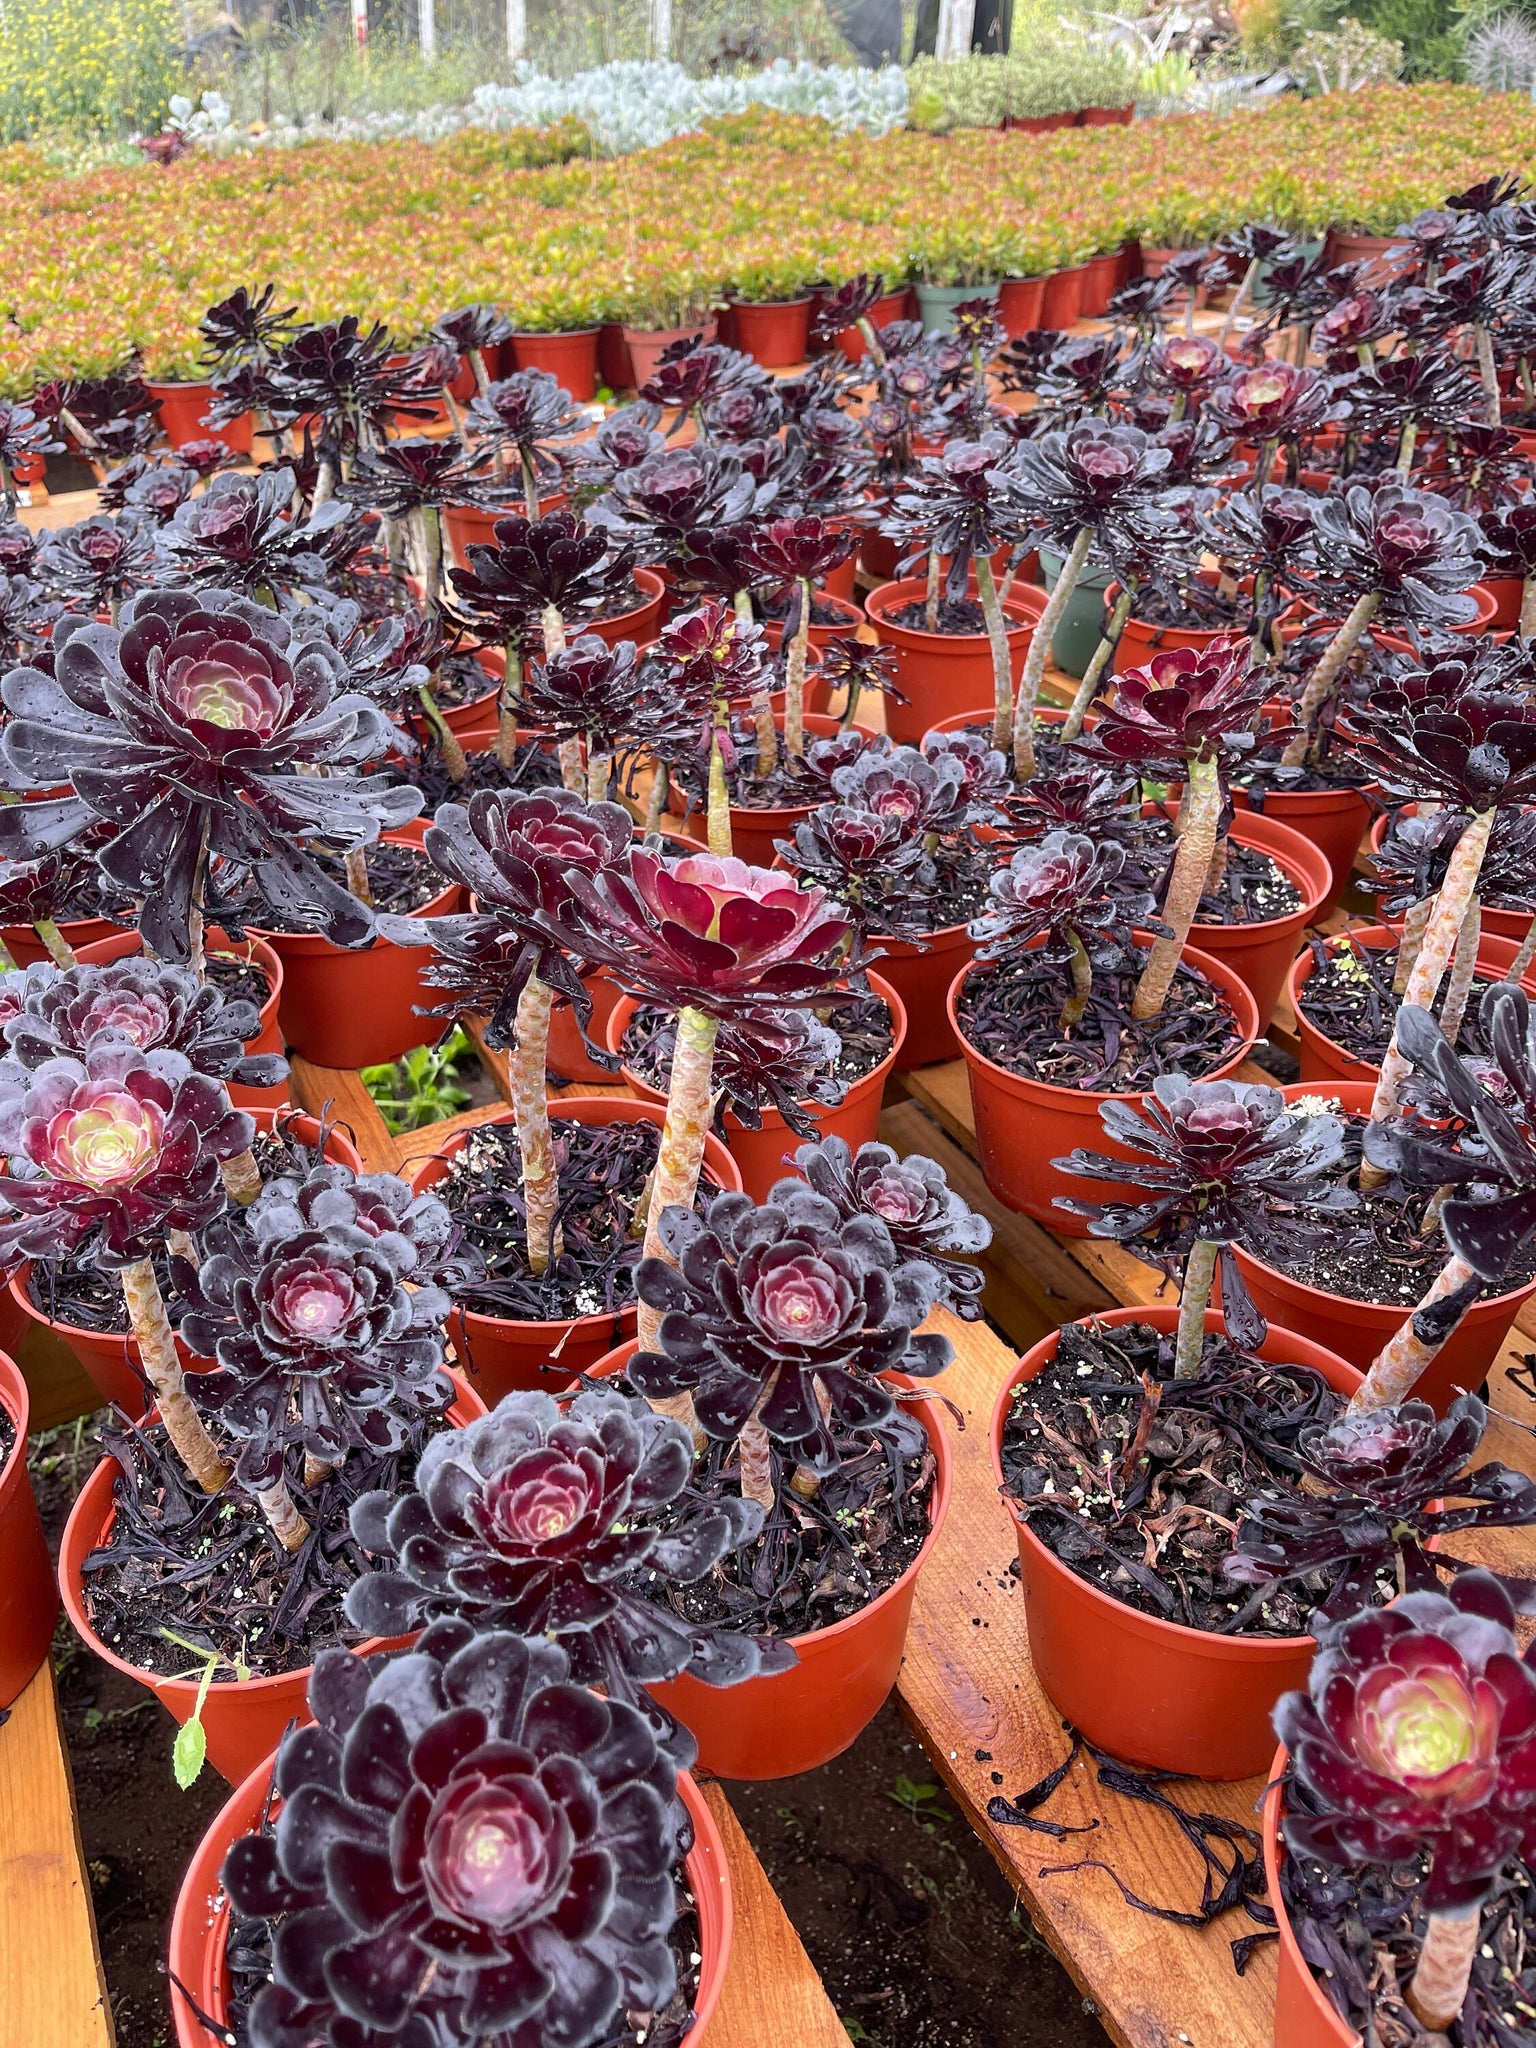 6’’ Aeonium Black Rose Live plant 2plants per pot – Dose of Succulents